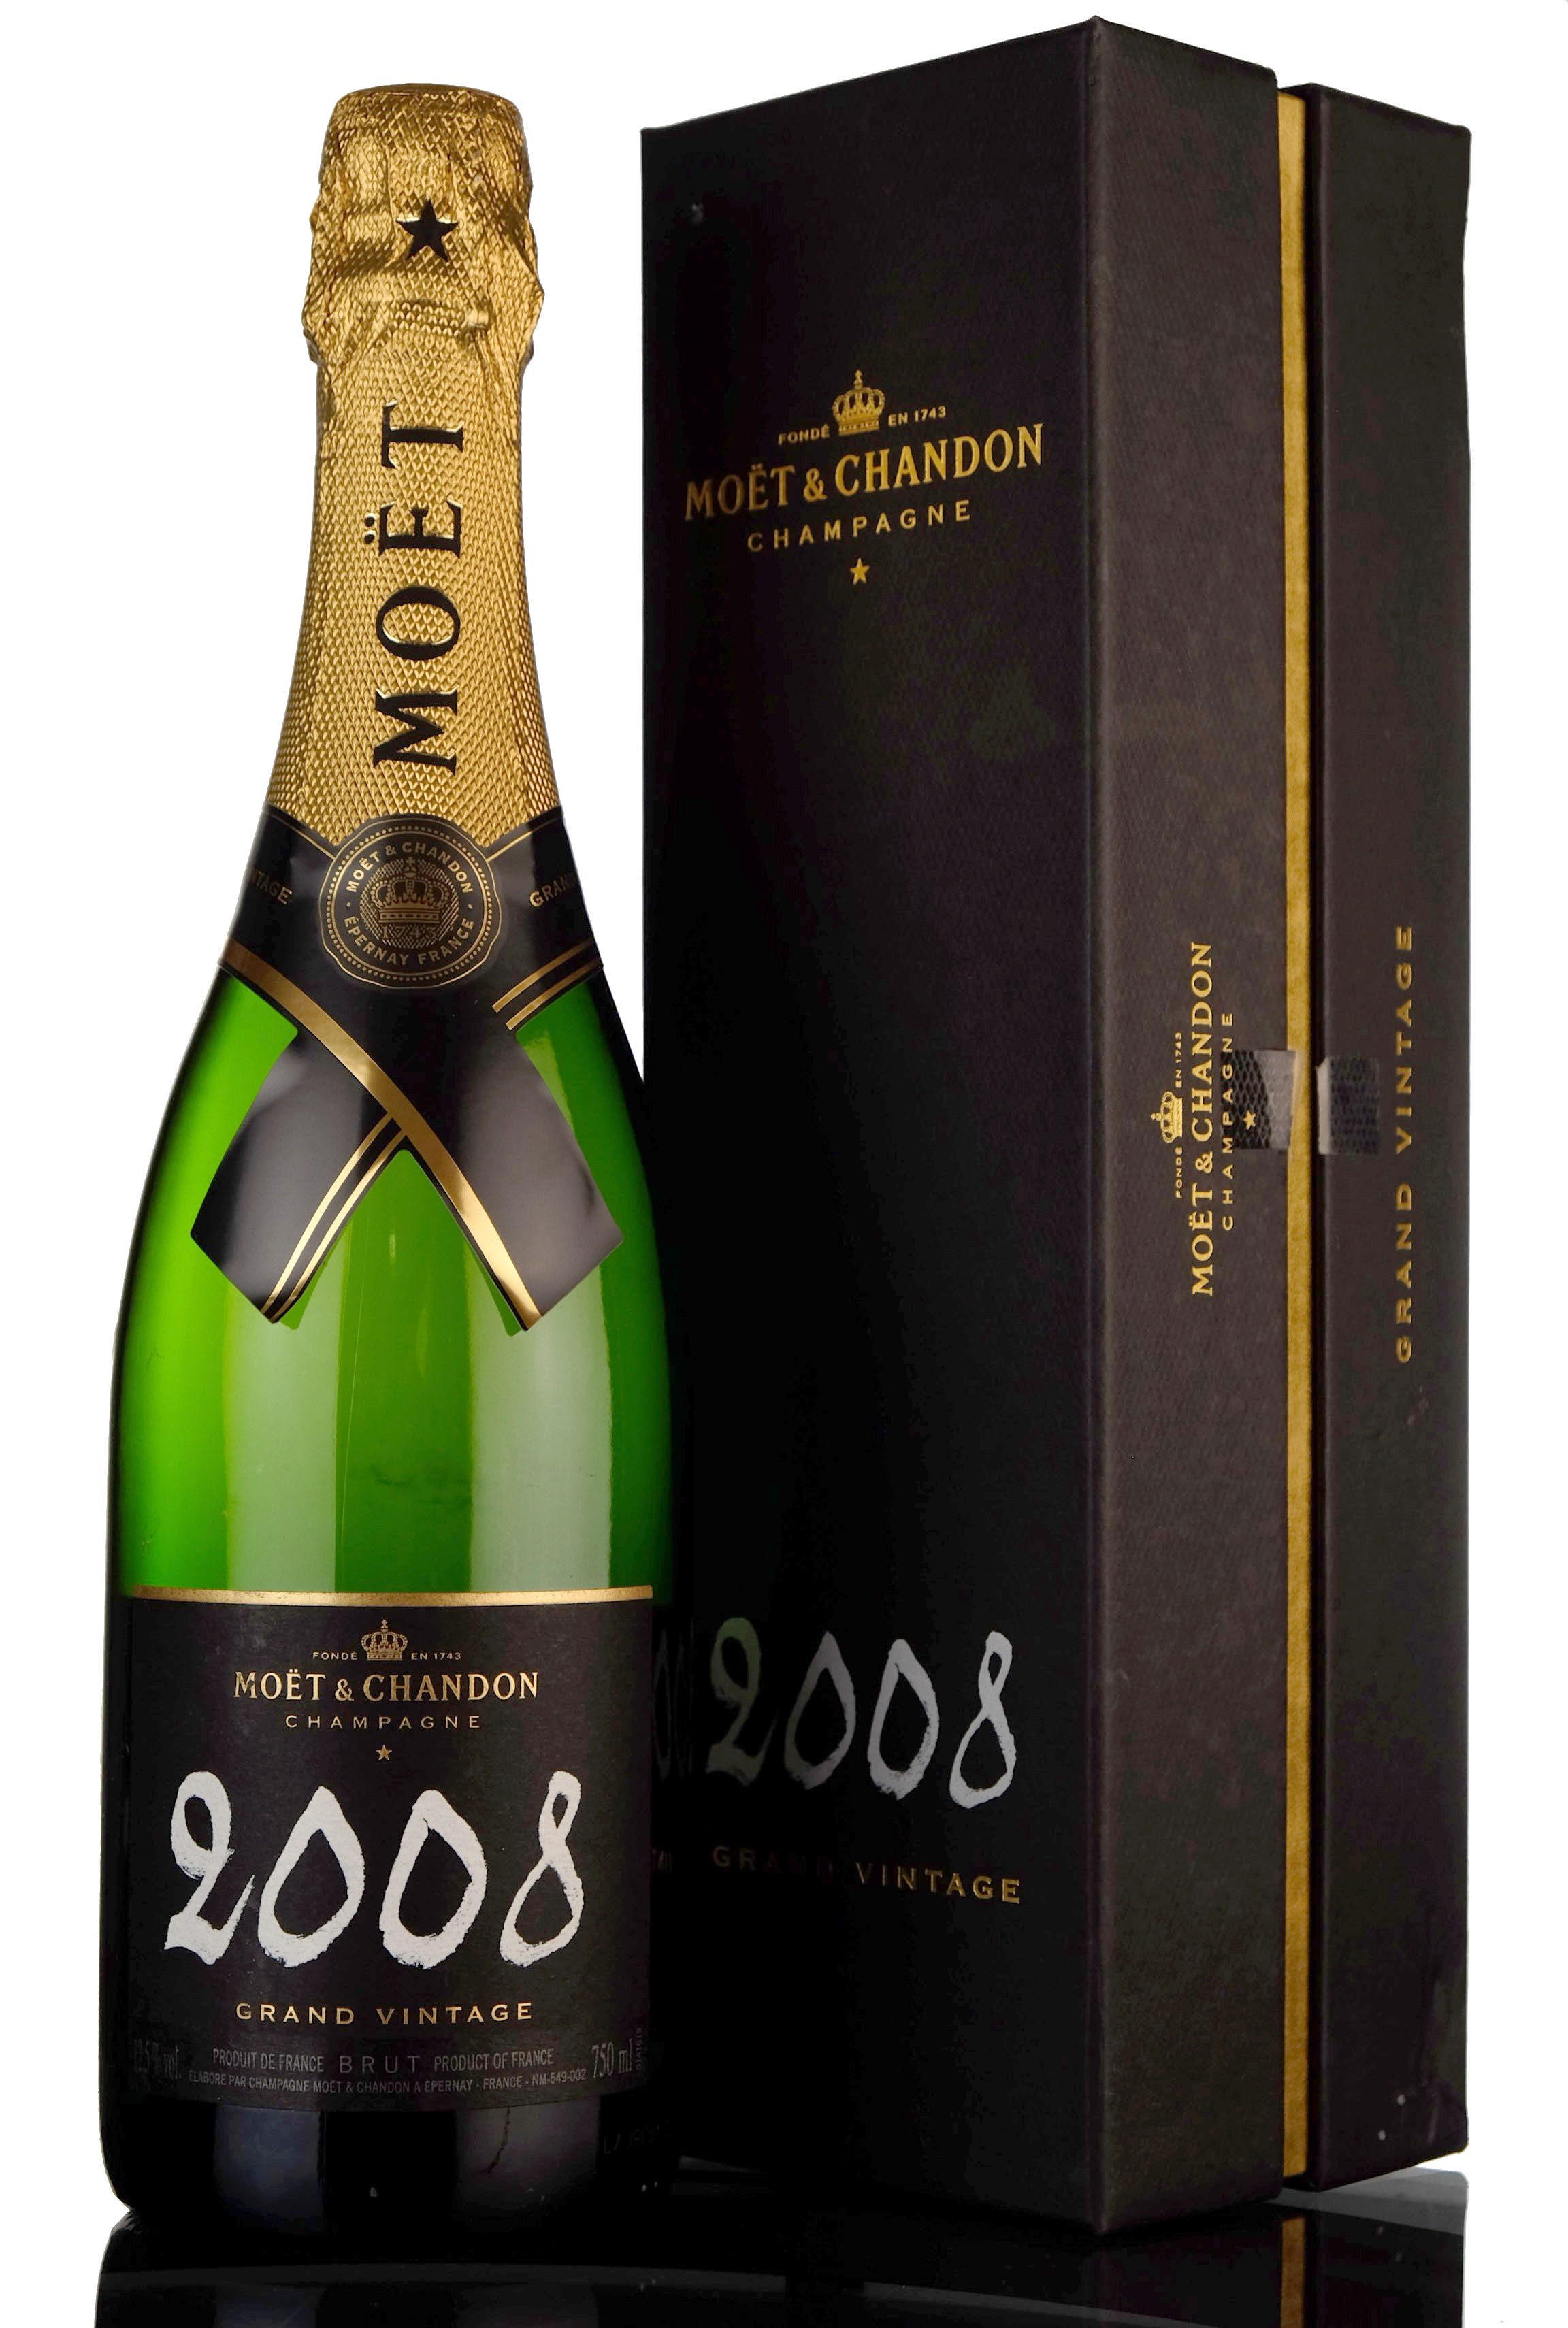 Moet & Chandon 2008 Grand Vintage Champagne